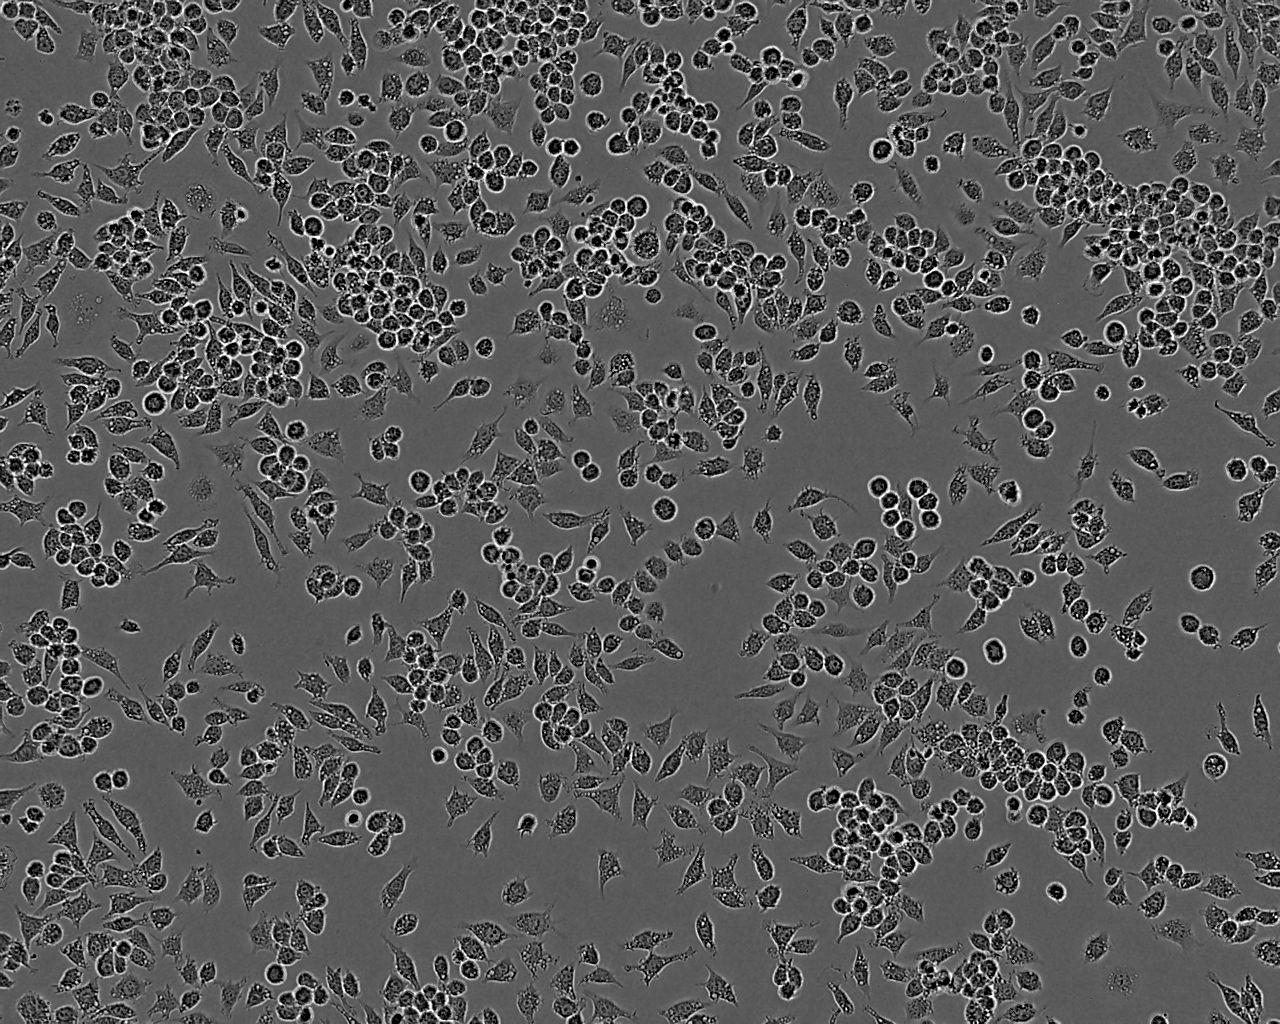 LC-1/sq epithelioid cells人肺癌鳞癌细胞系,LC-1/sq epithelioid cells